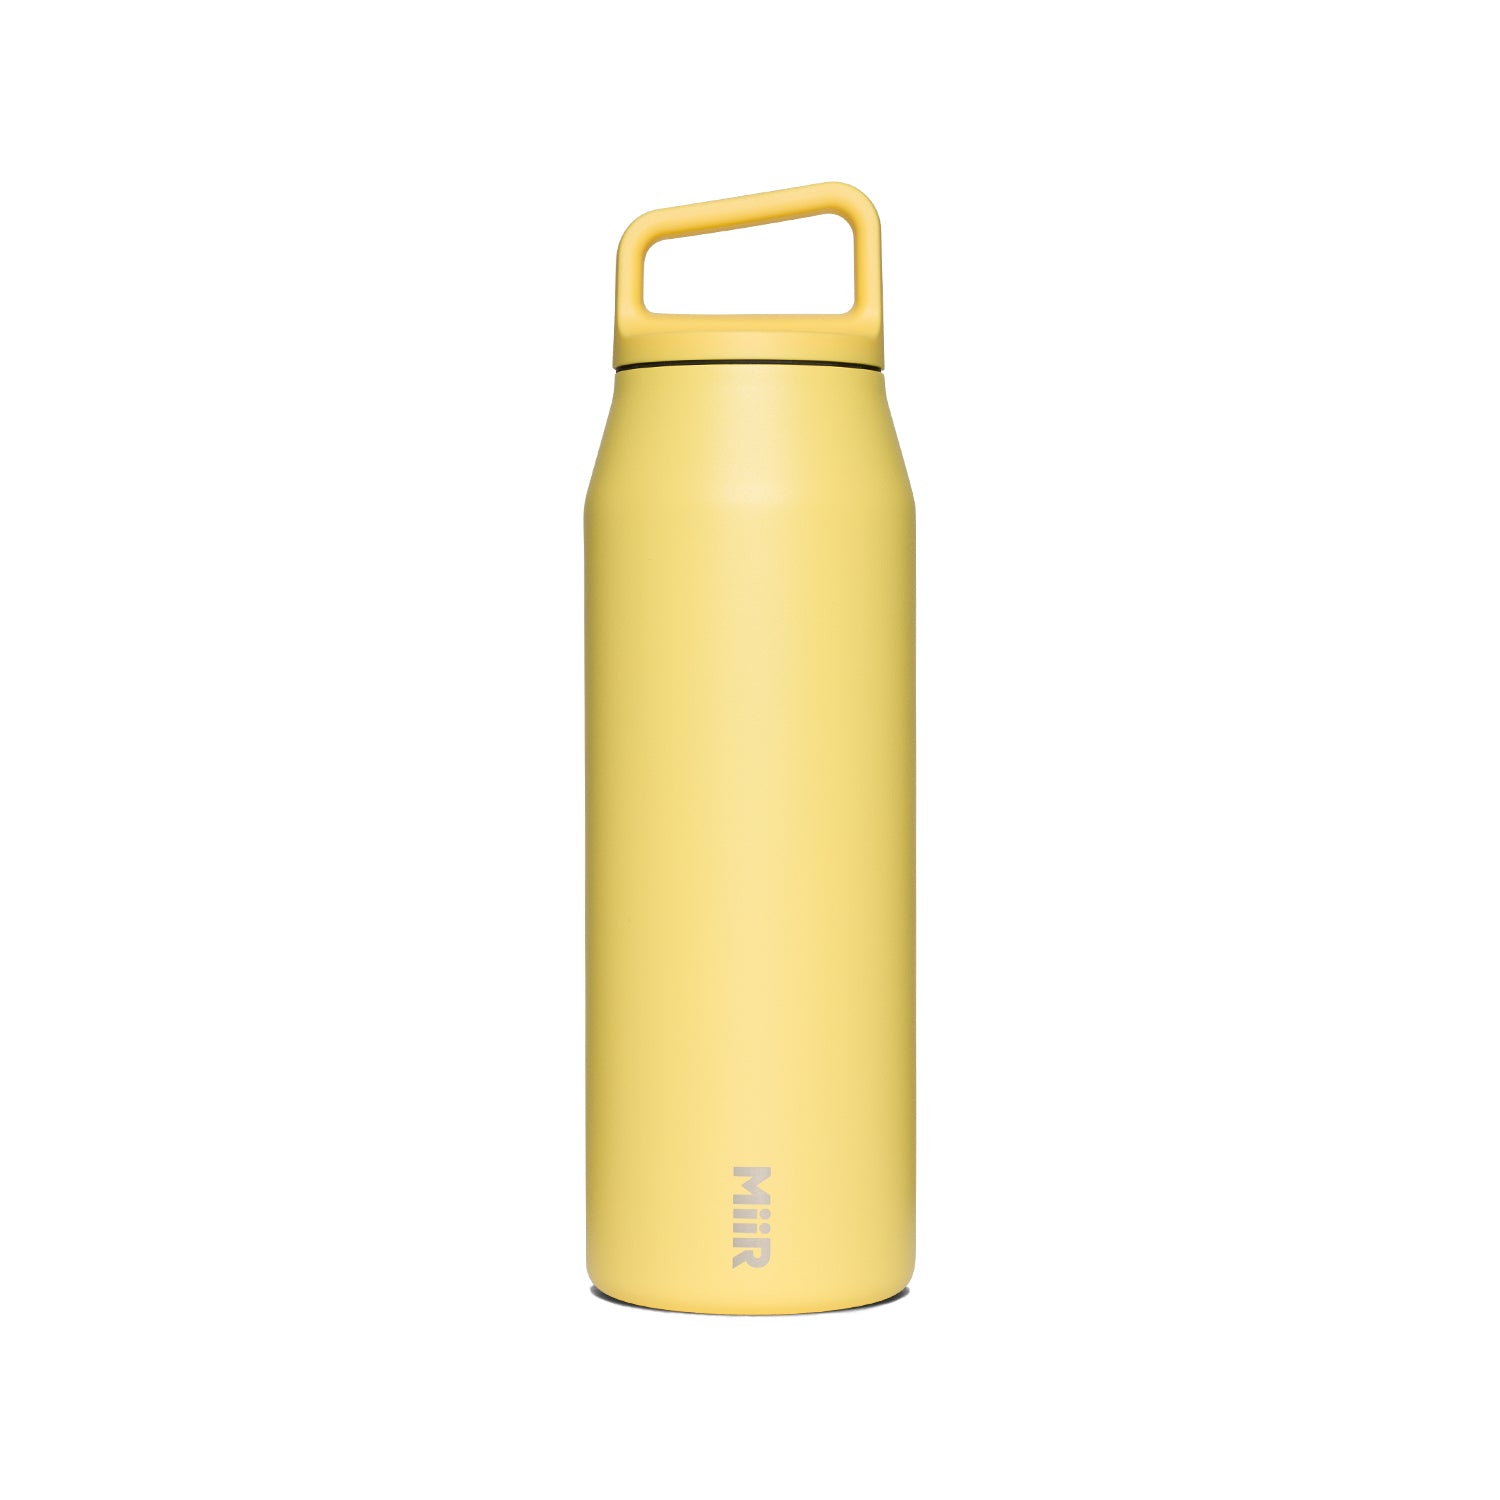 12 Custom Water Bottles MiiR Vacuum Insulated Wide Mouth Leakproof Straw Lid Bottle - 20 oz.